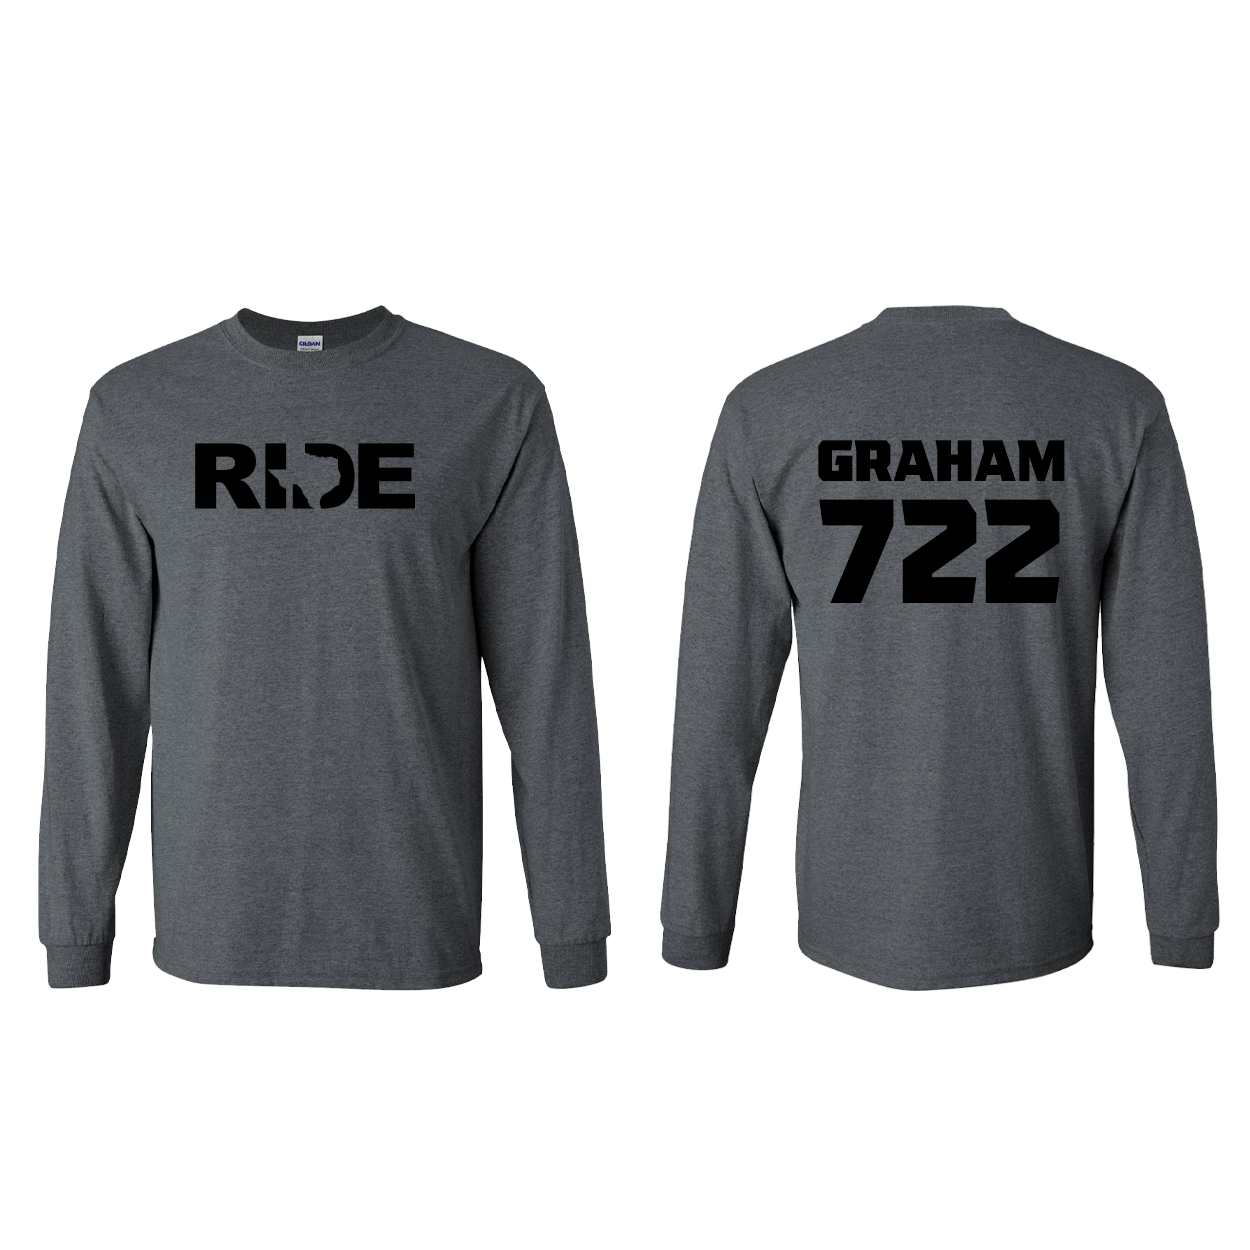 FXR BMX Race Team Classic Athlete Support Long Sleeve Shirt GRAHAM #722 Dark Heather (Black Logo)